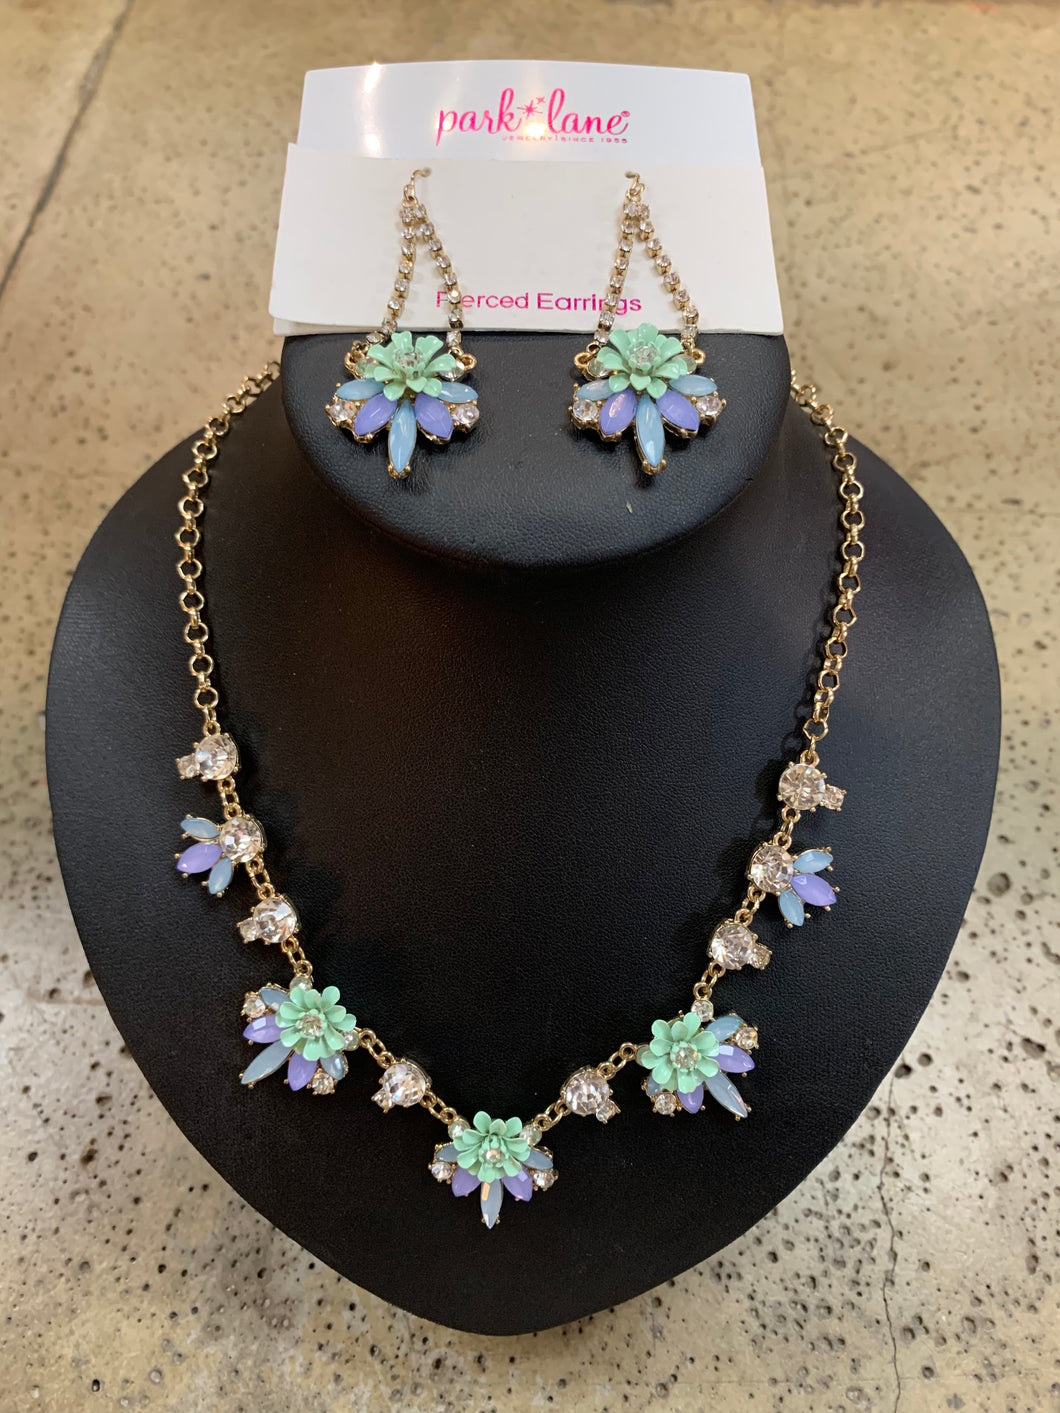 Floral Rhinestone Necklace & Earrings Set